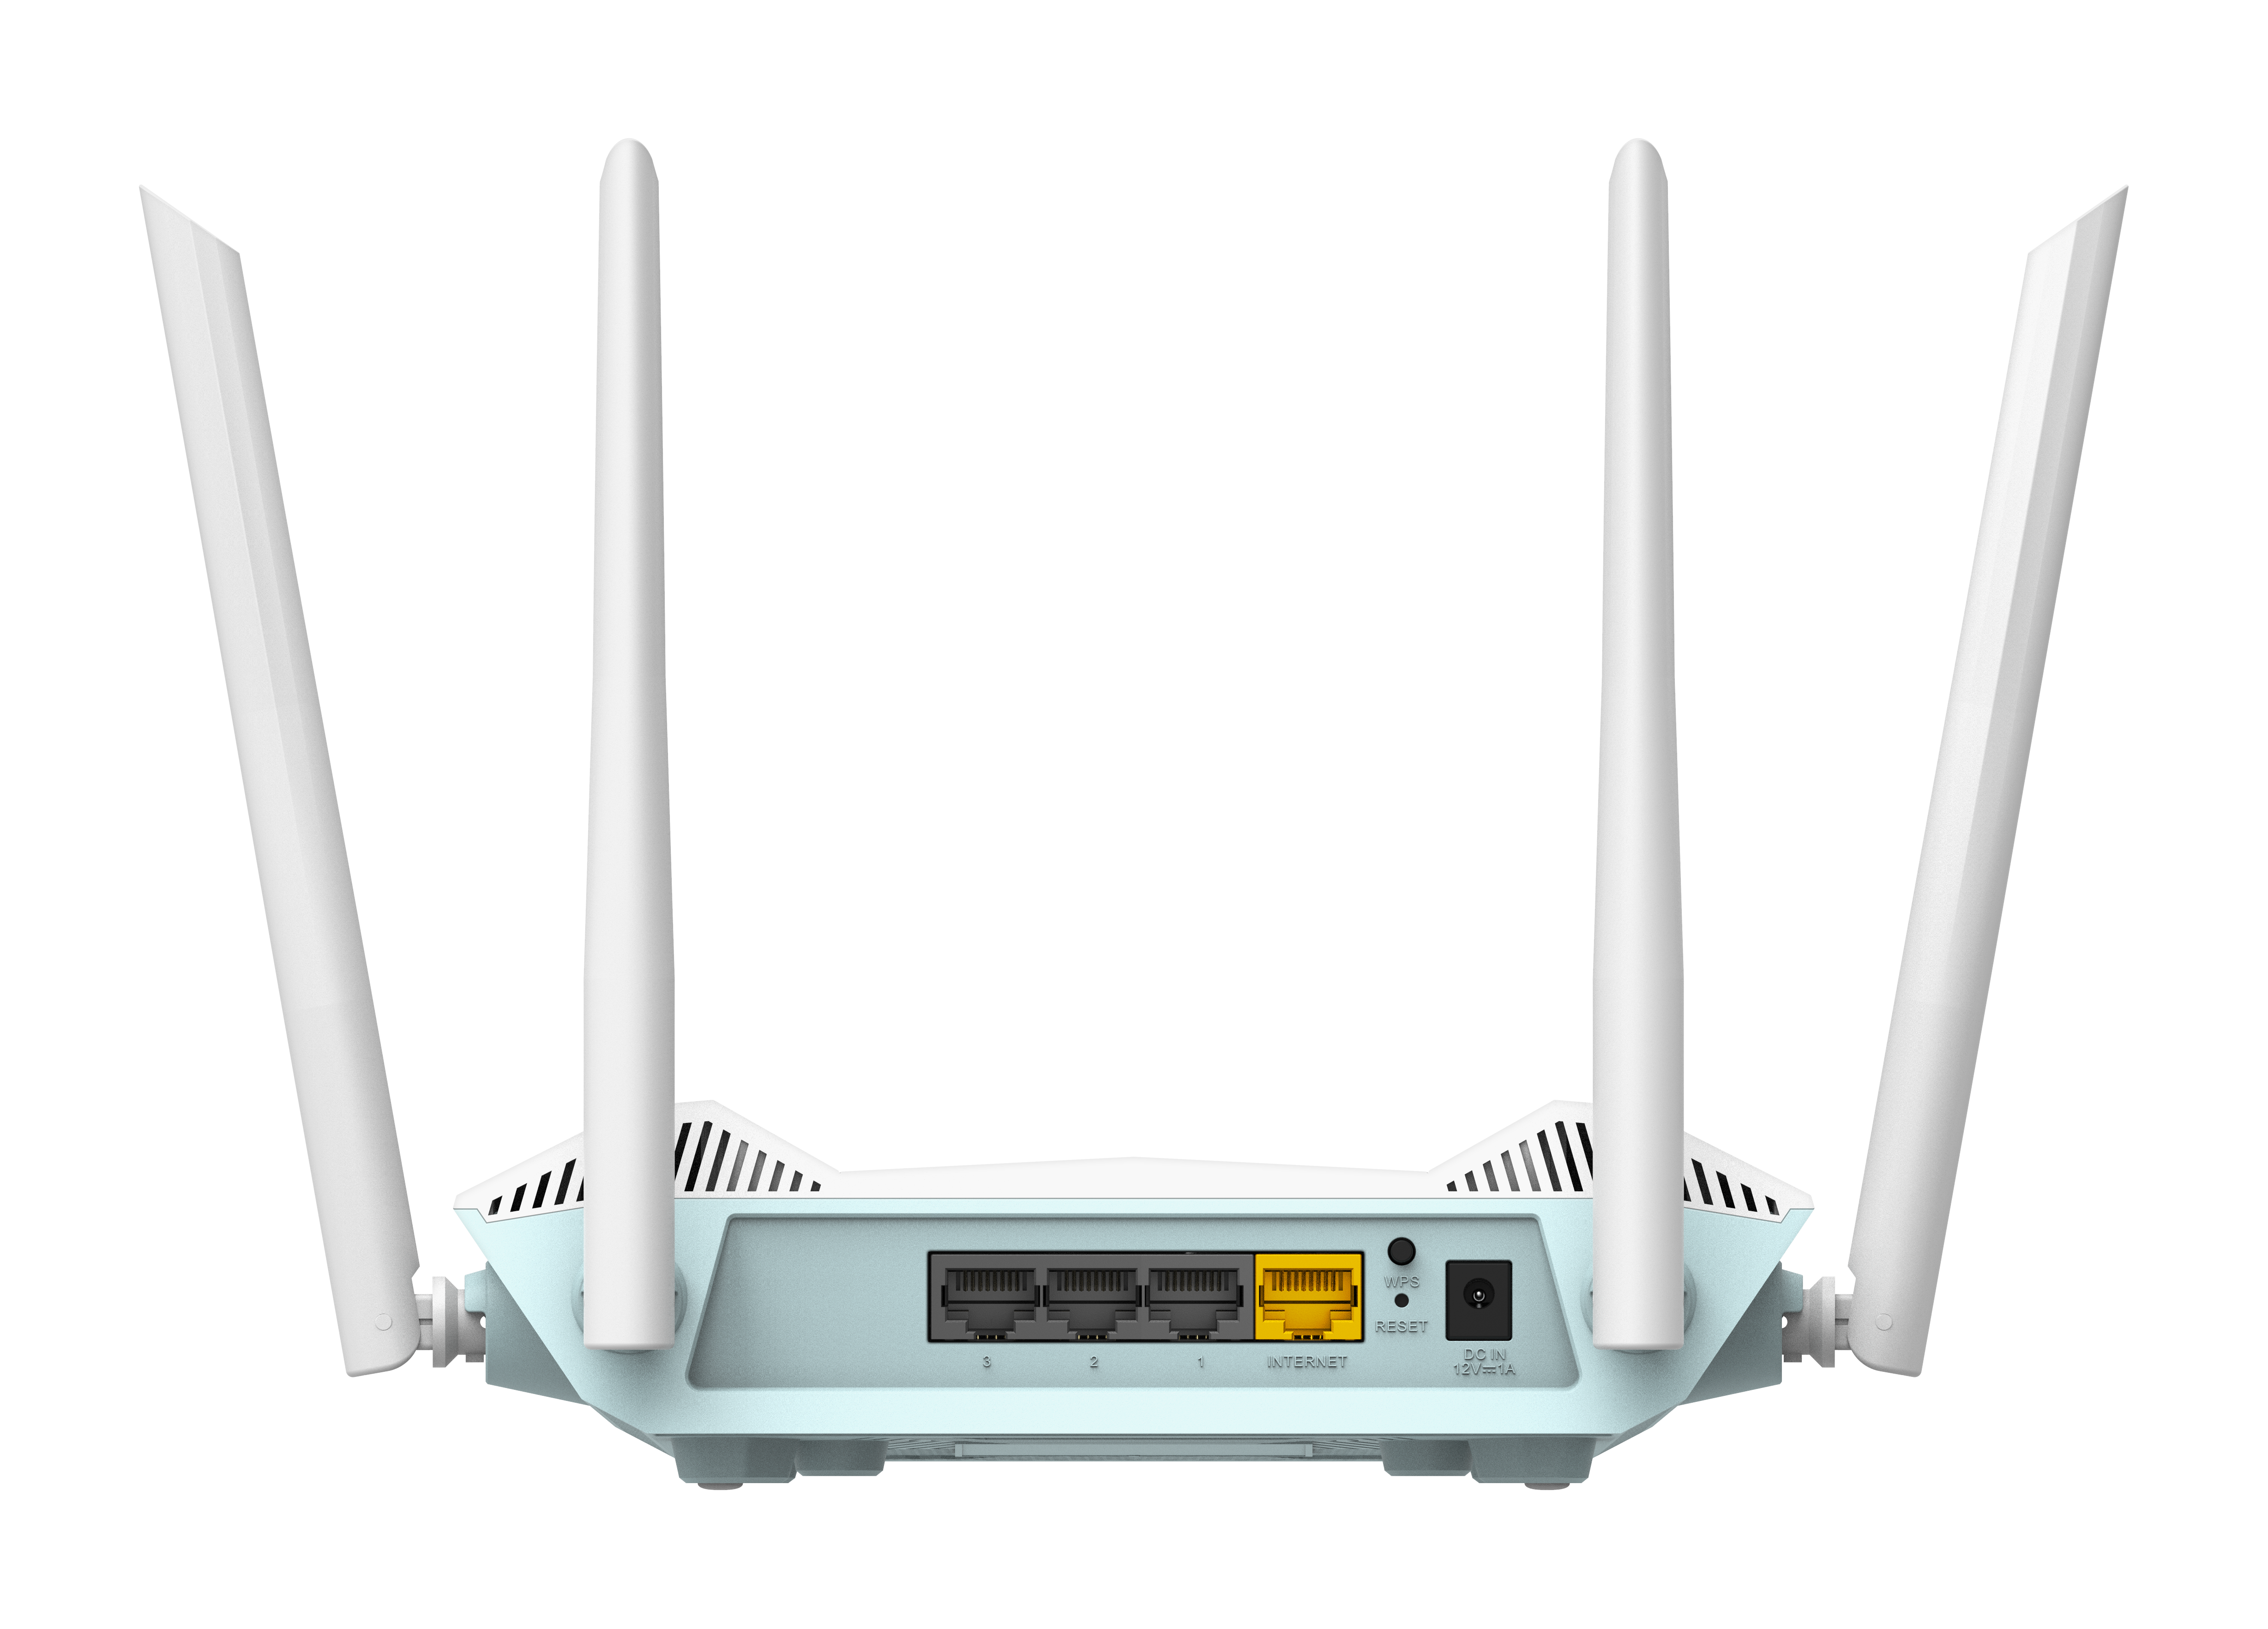 R15 EAGLE PRO AI AX1500 Smart Router - Back view.